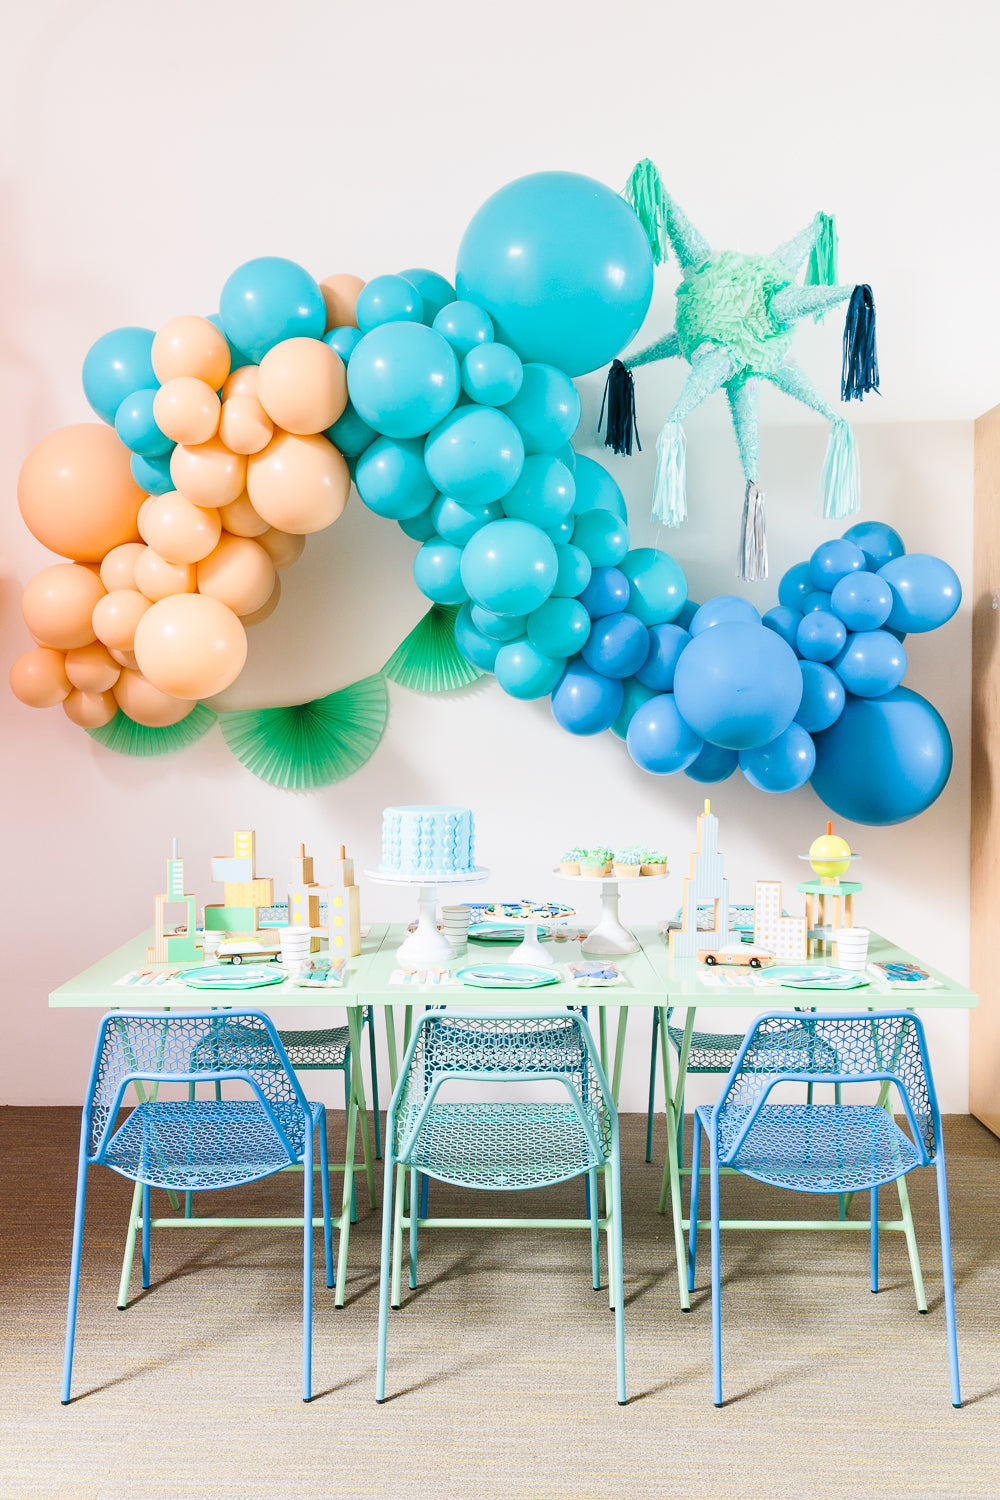 Blue balloon garland with fiesta decorations - Los Angeles balloon installation